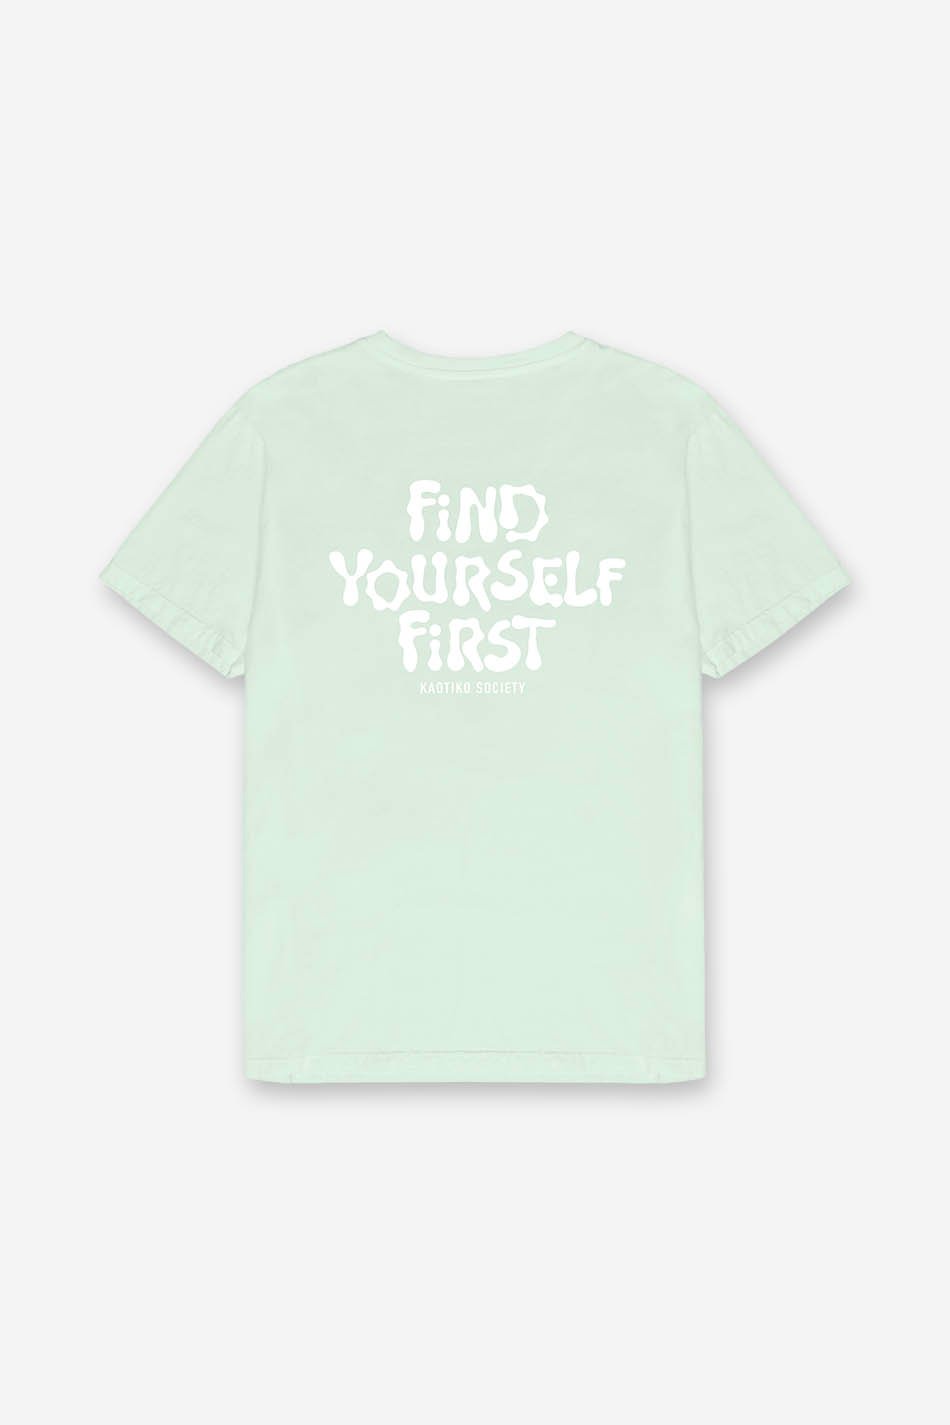 Camiseta Washed Find Yourself